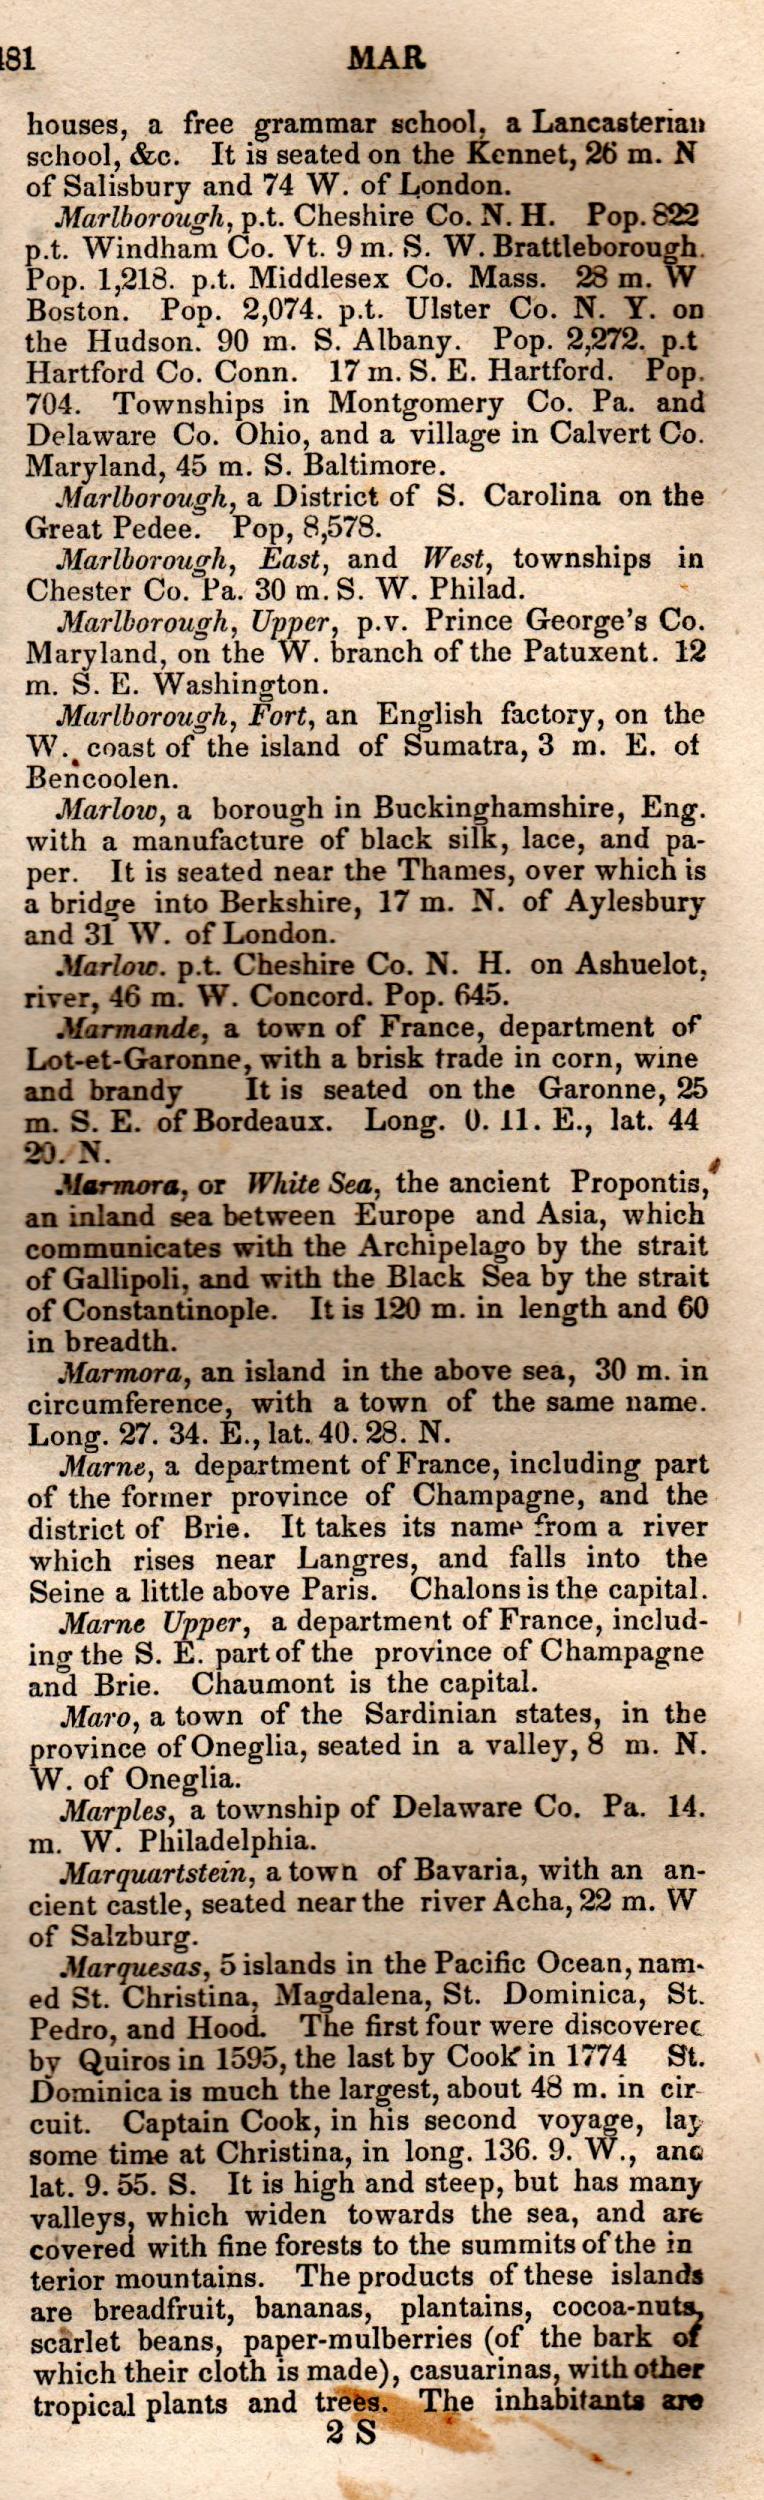 Brookes’ Universal Gazetteer (1850), Page 481 Right Column